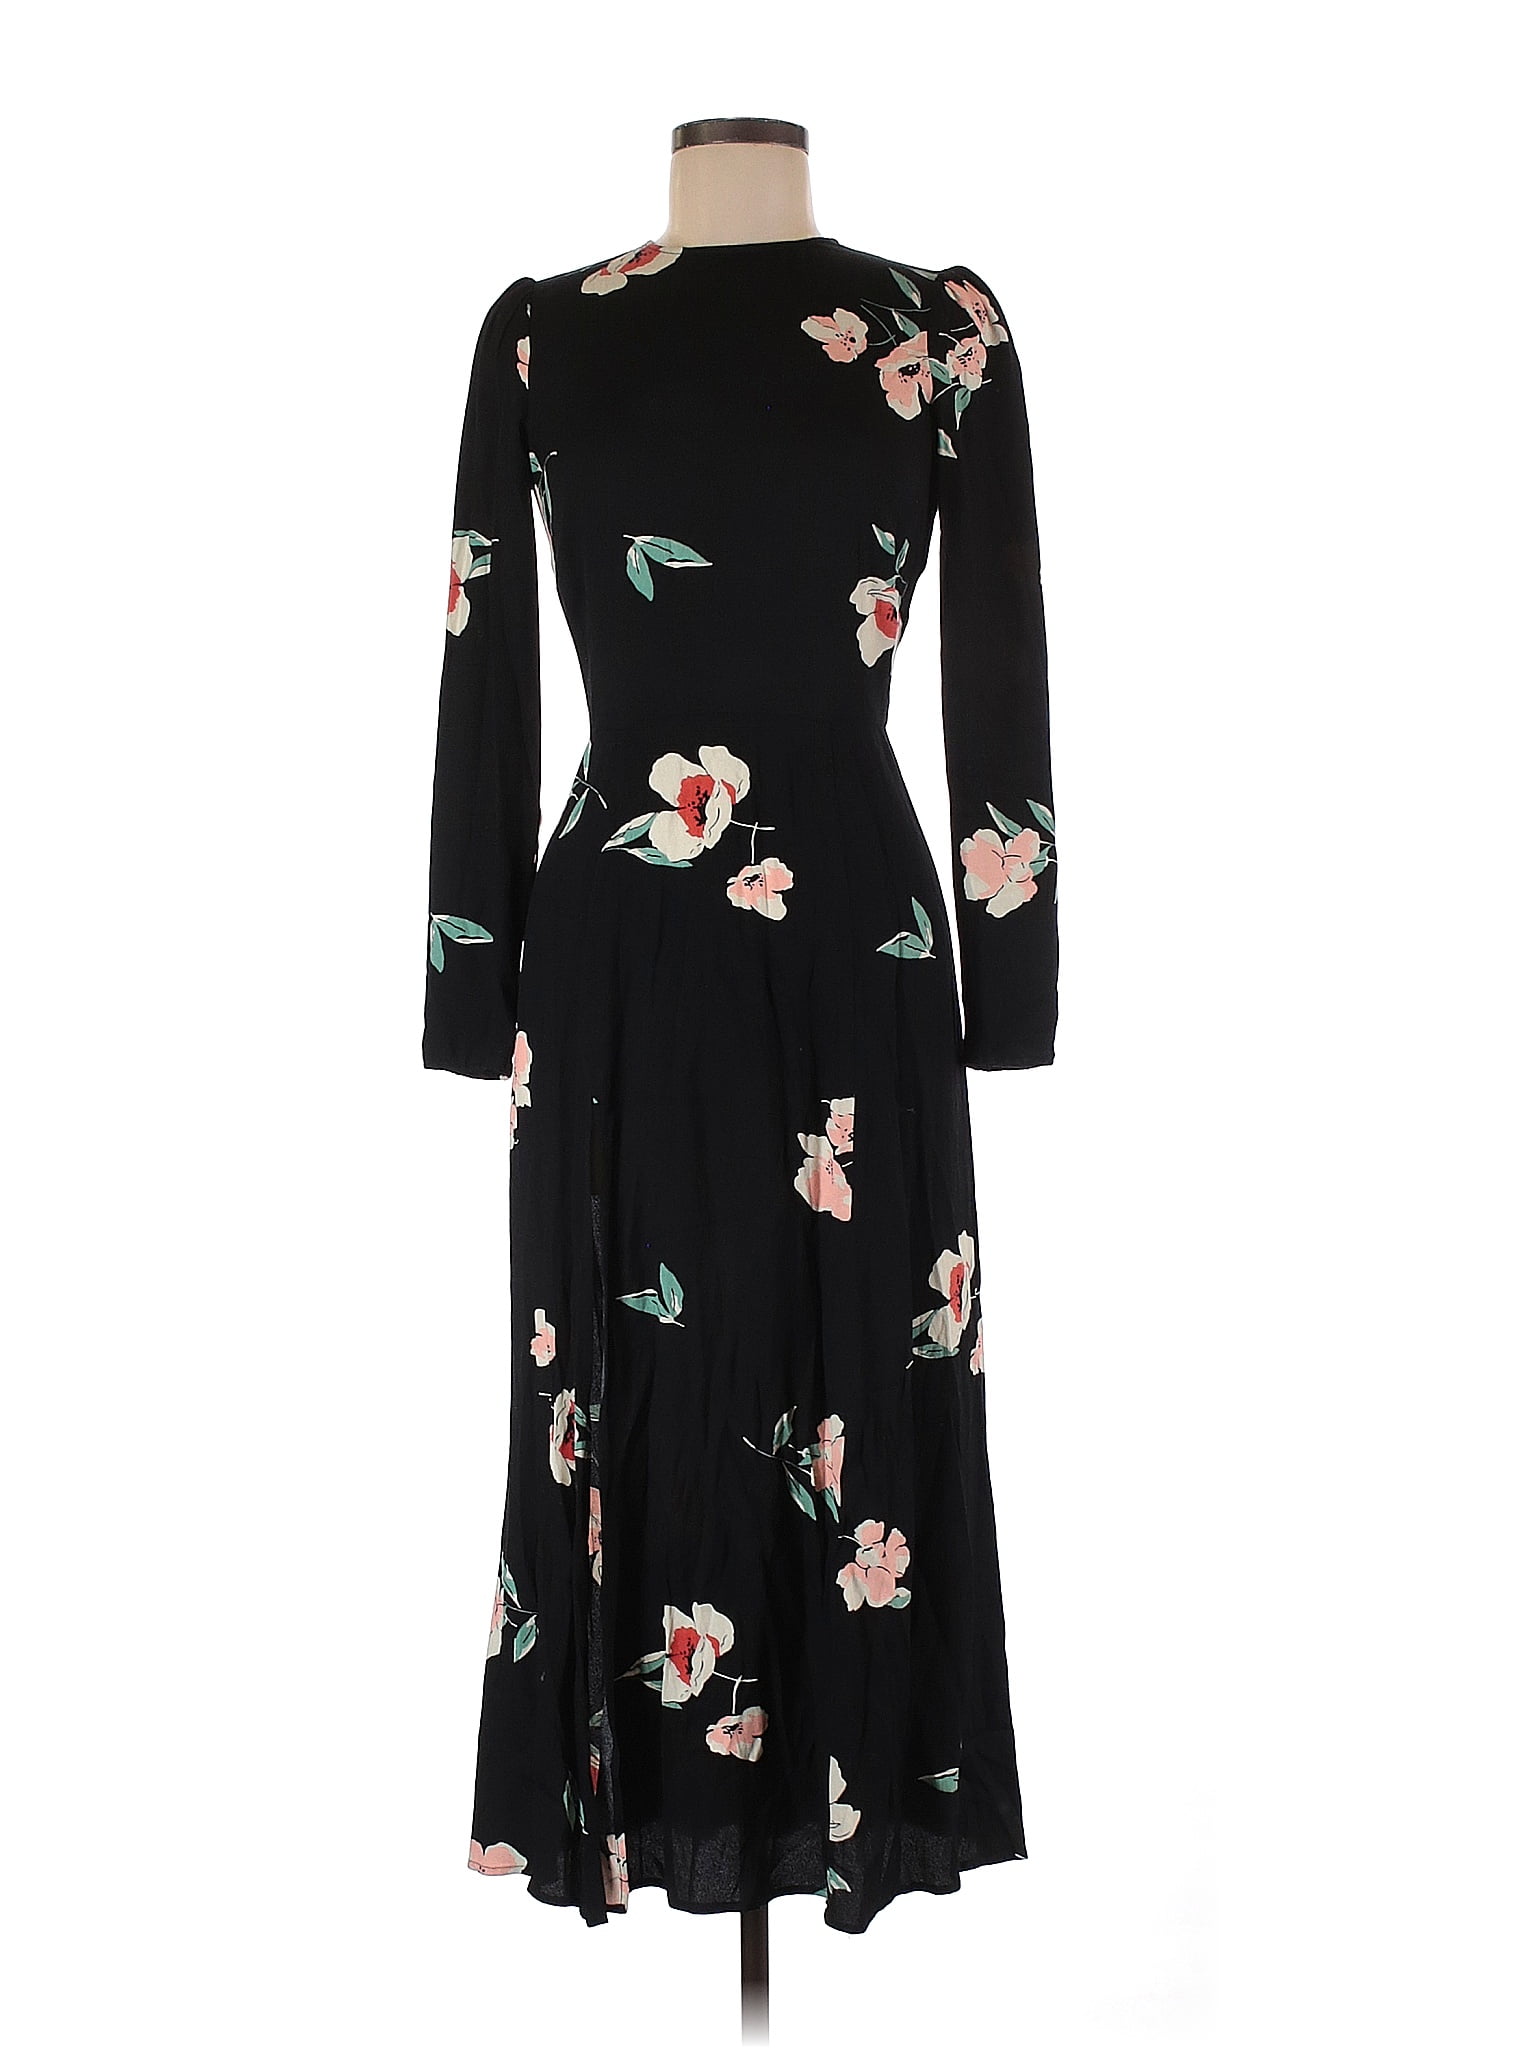 Reformation Floral Black Casual Dress Size 4 - 58% off | thredUP